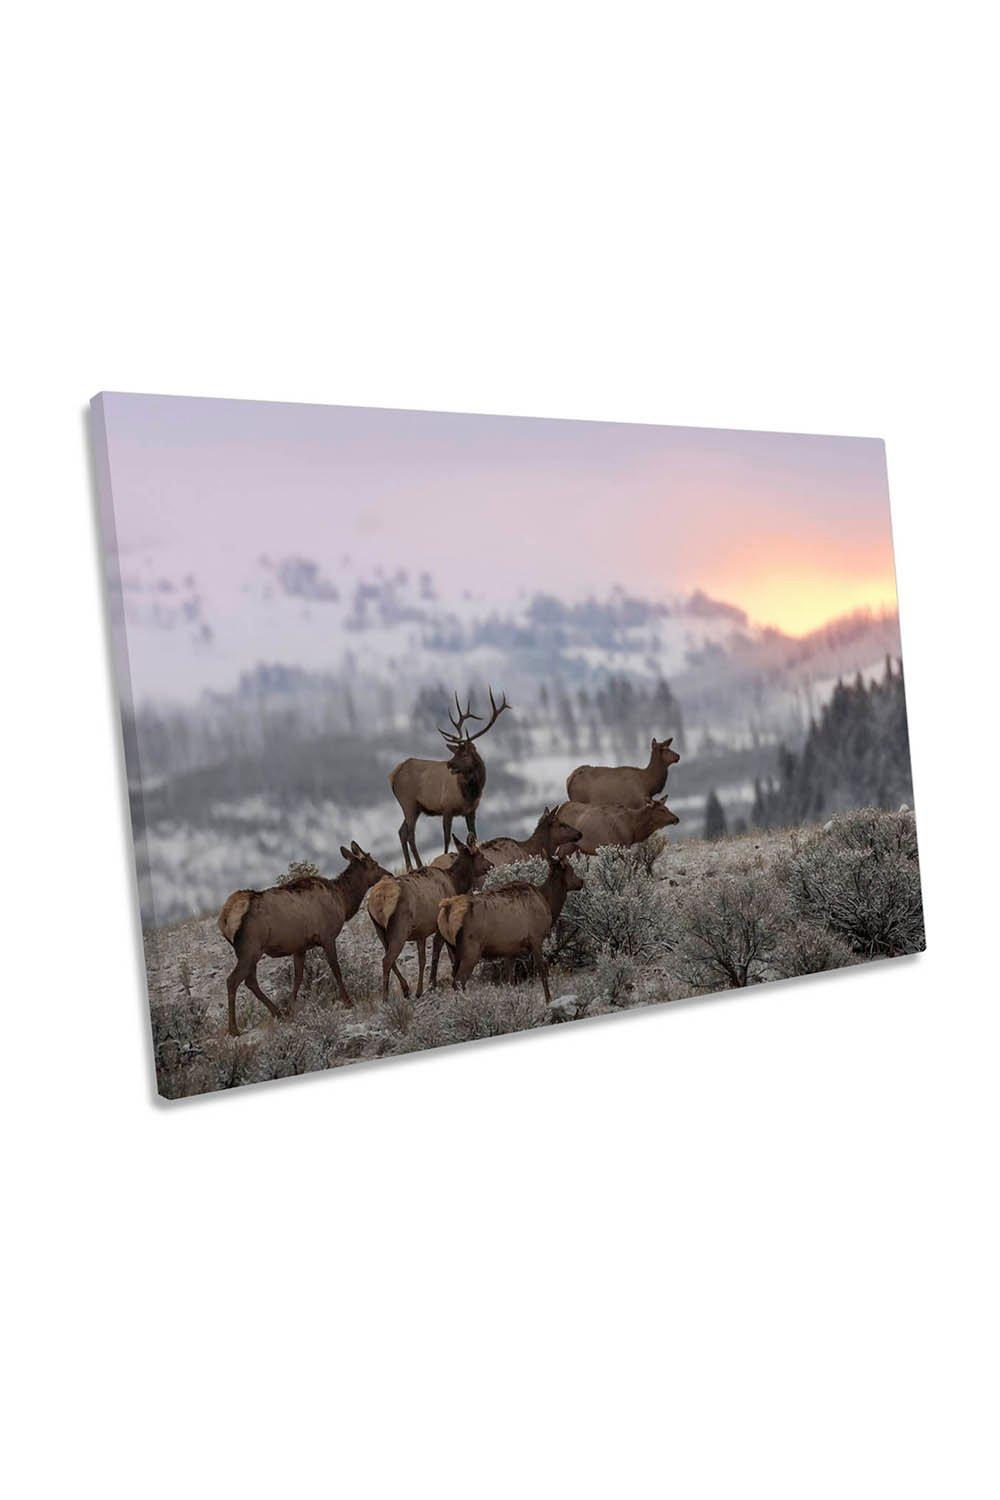 First Light Reindeer Wildlife Canvas Wall Art Picture Print